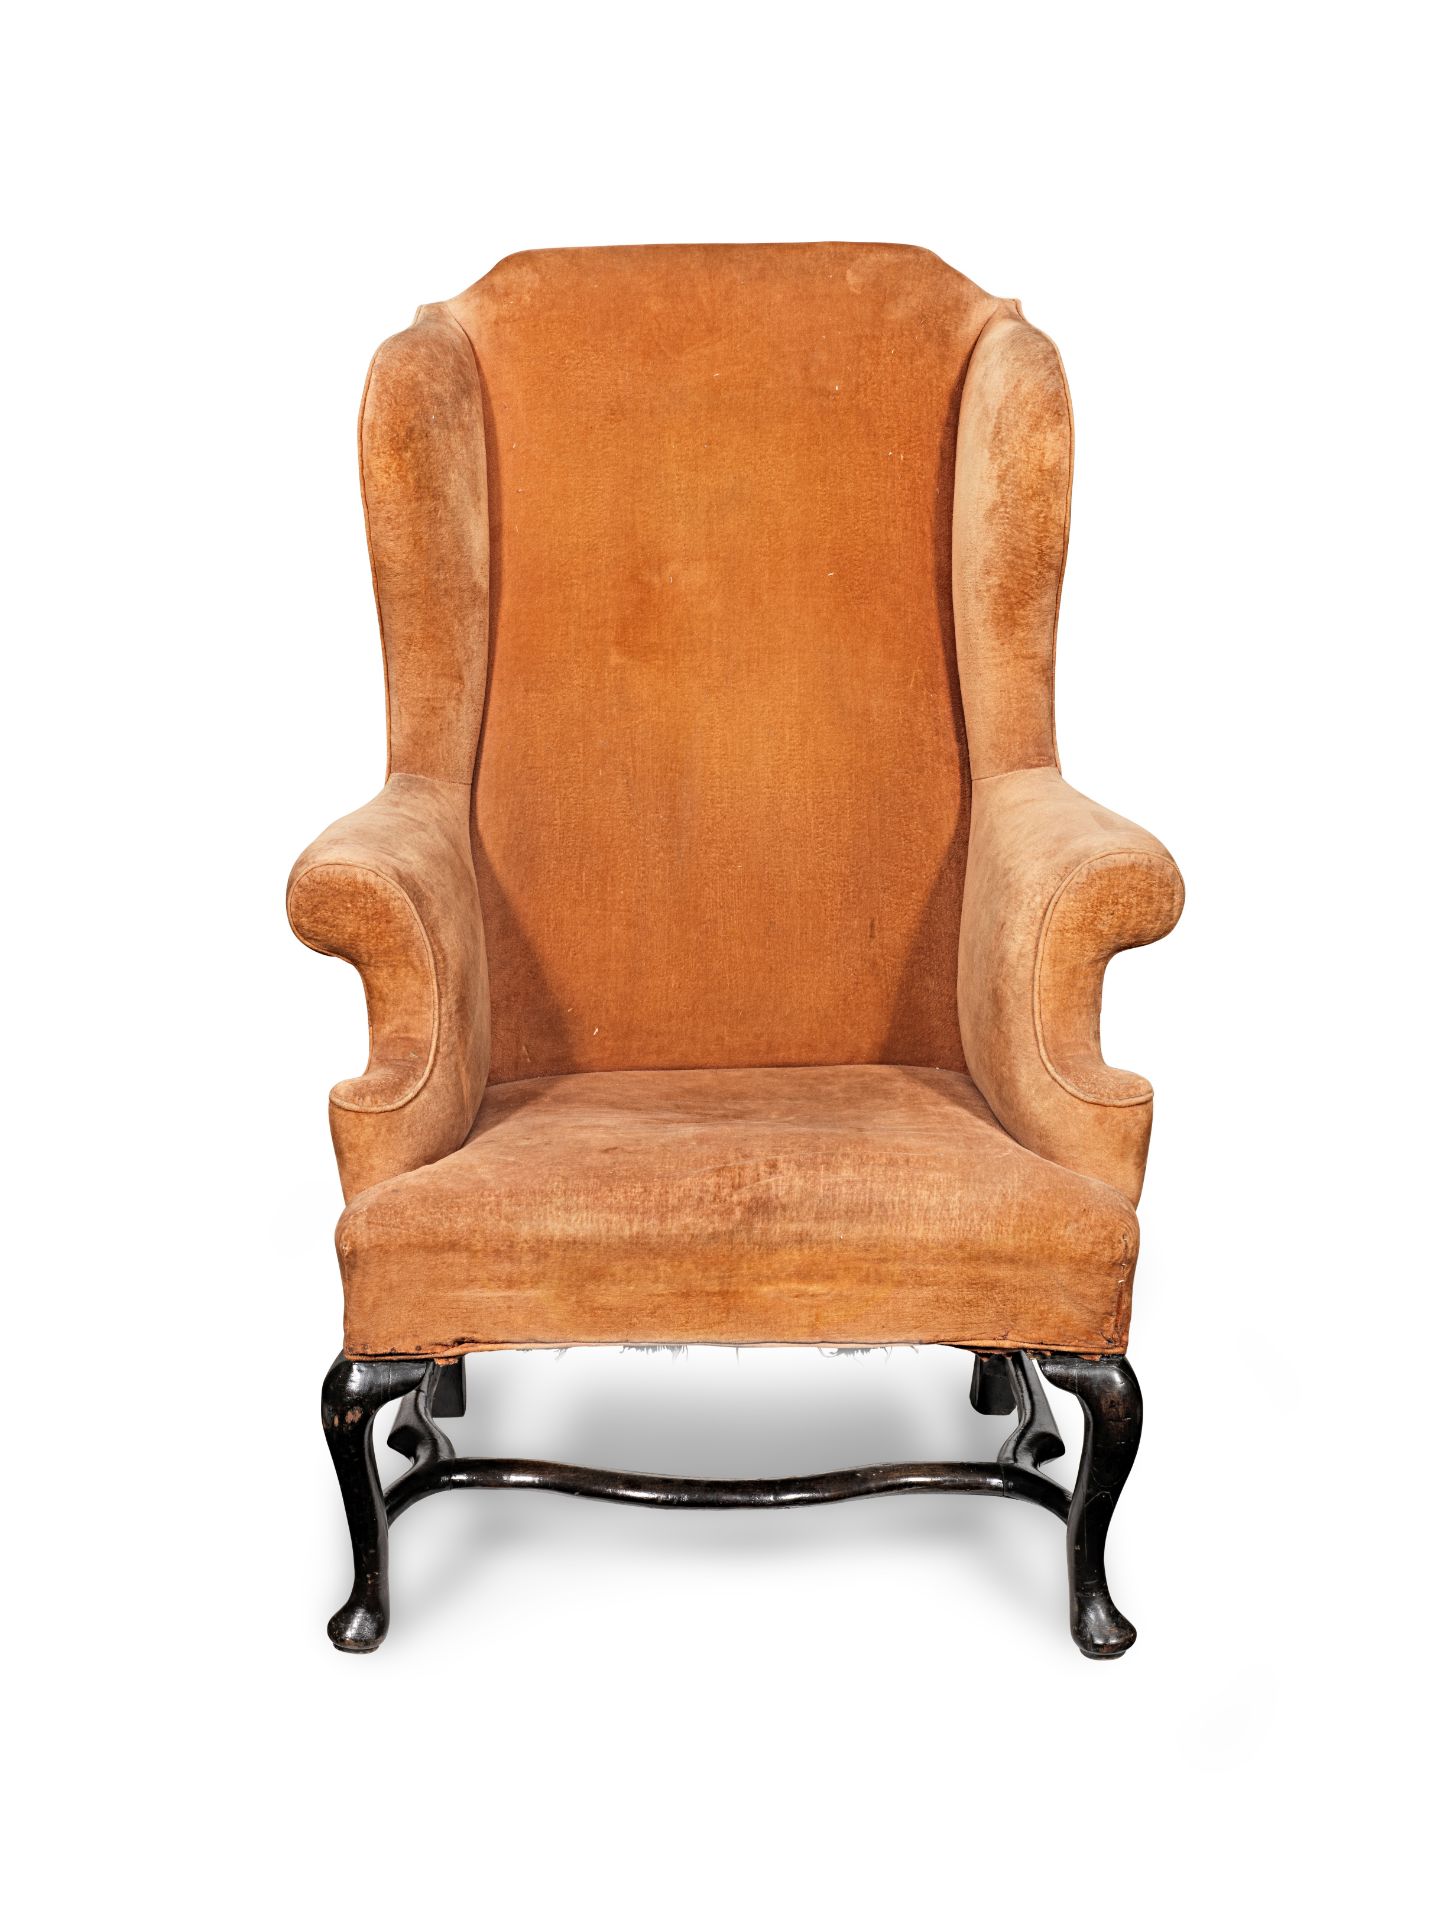 A George I walnut wing armchair